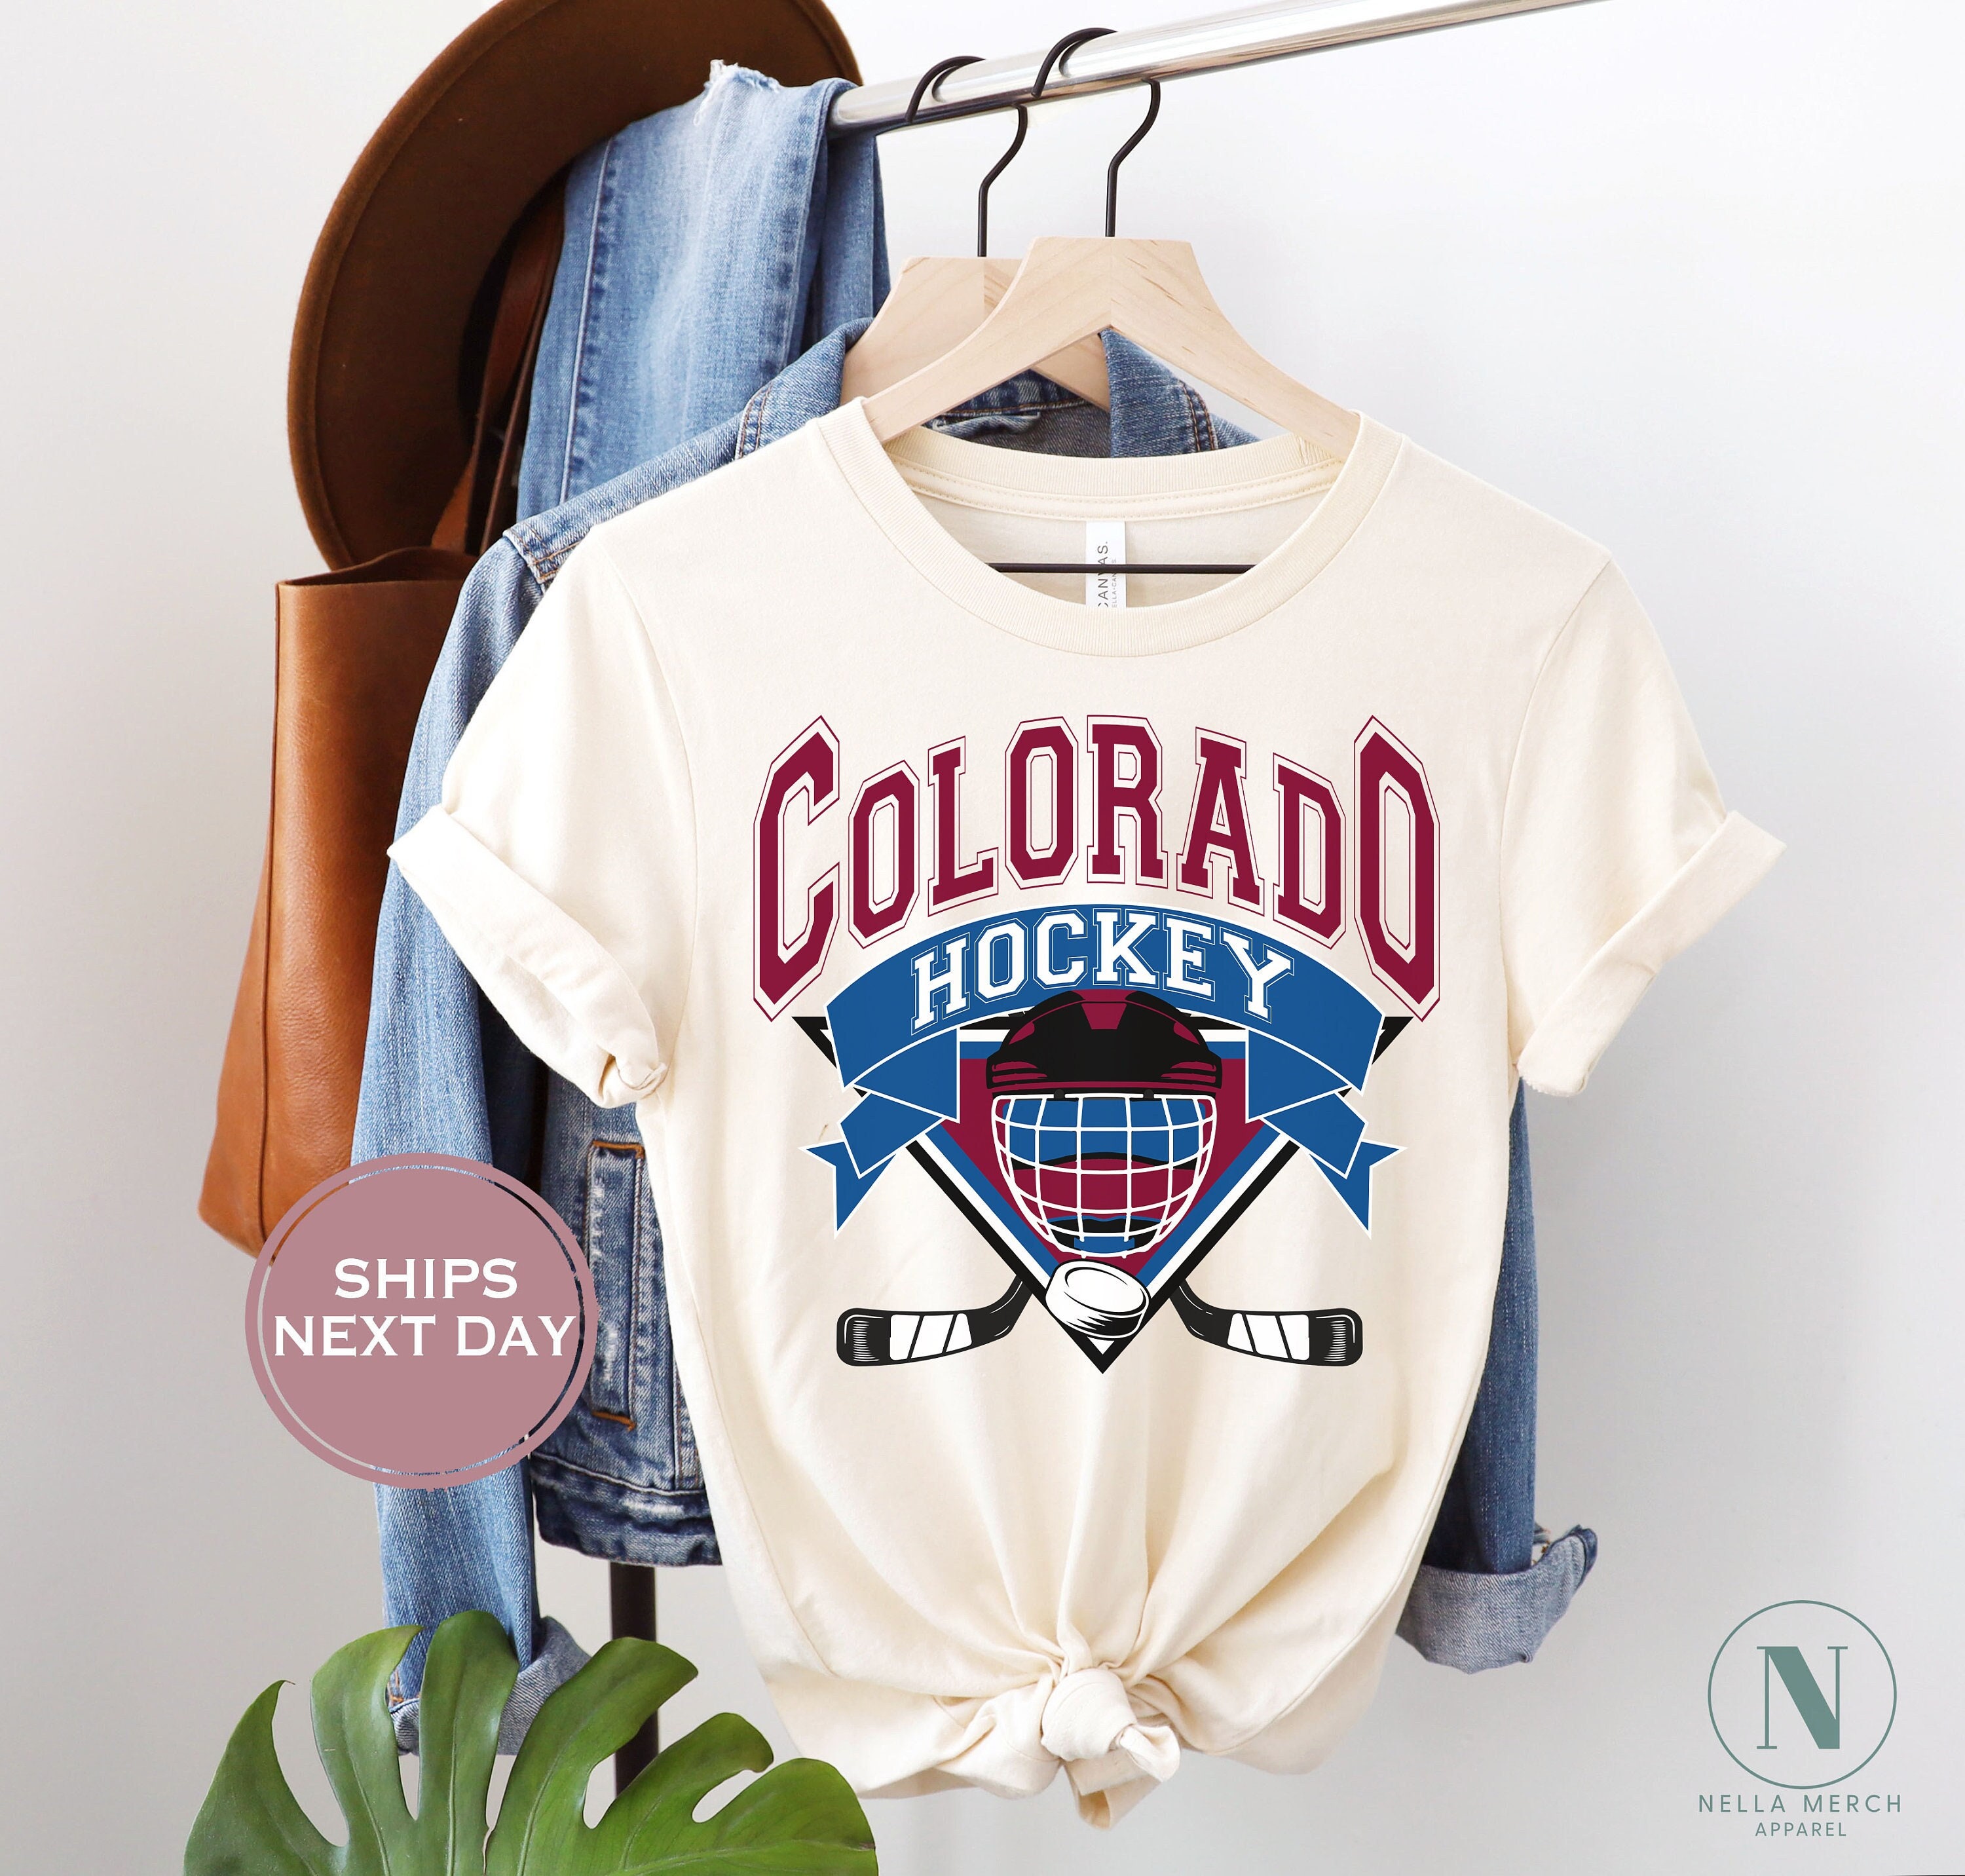 NHL Jerseys for sale in Denver, Colorado